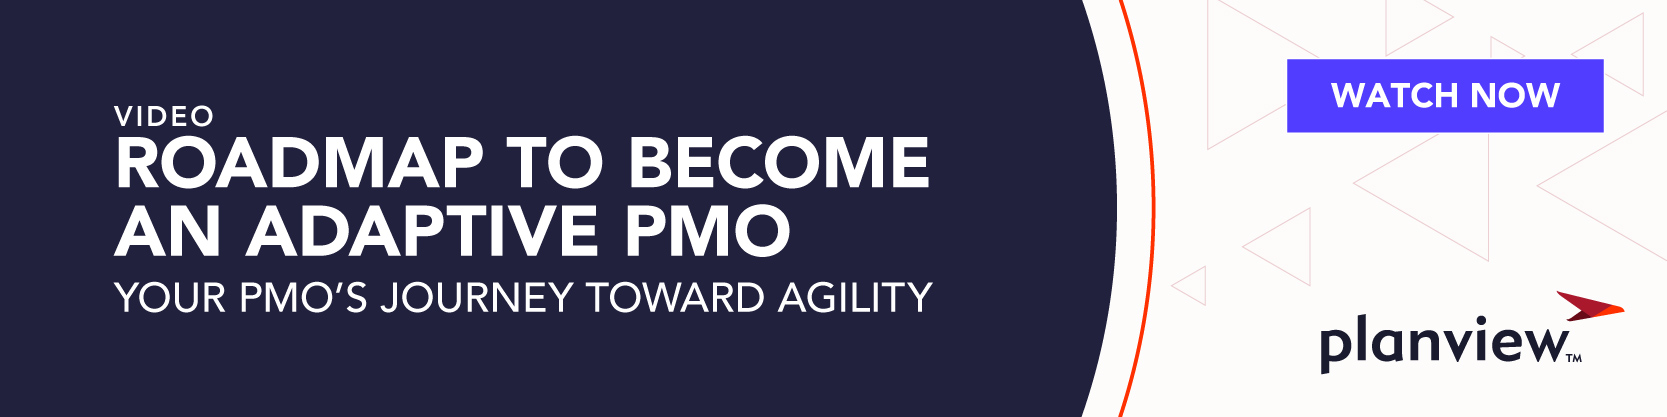 Become an adaptive pmo